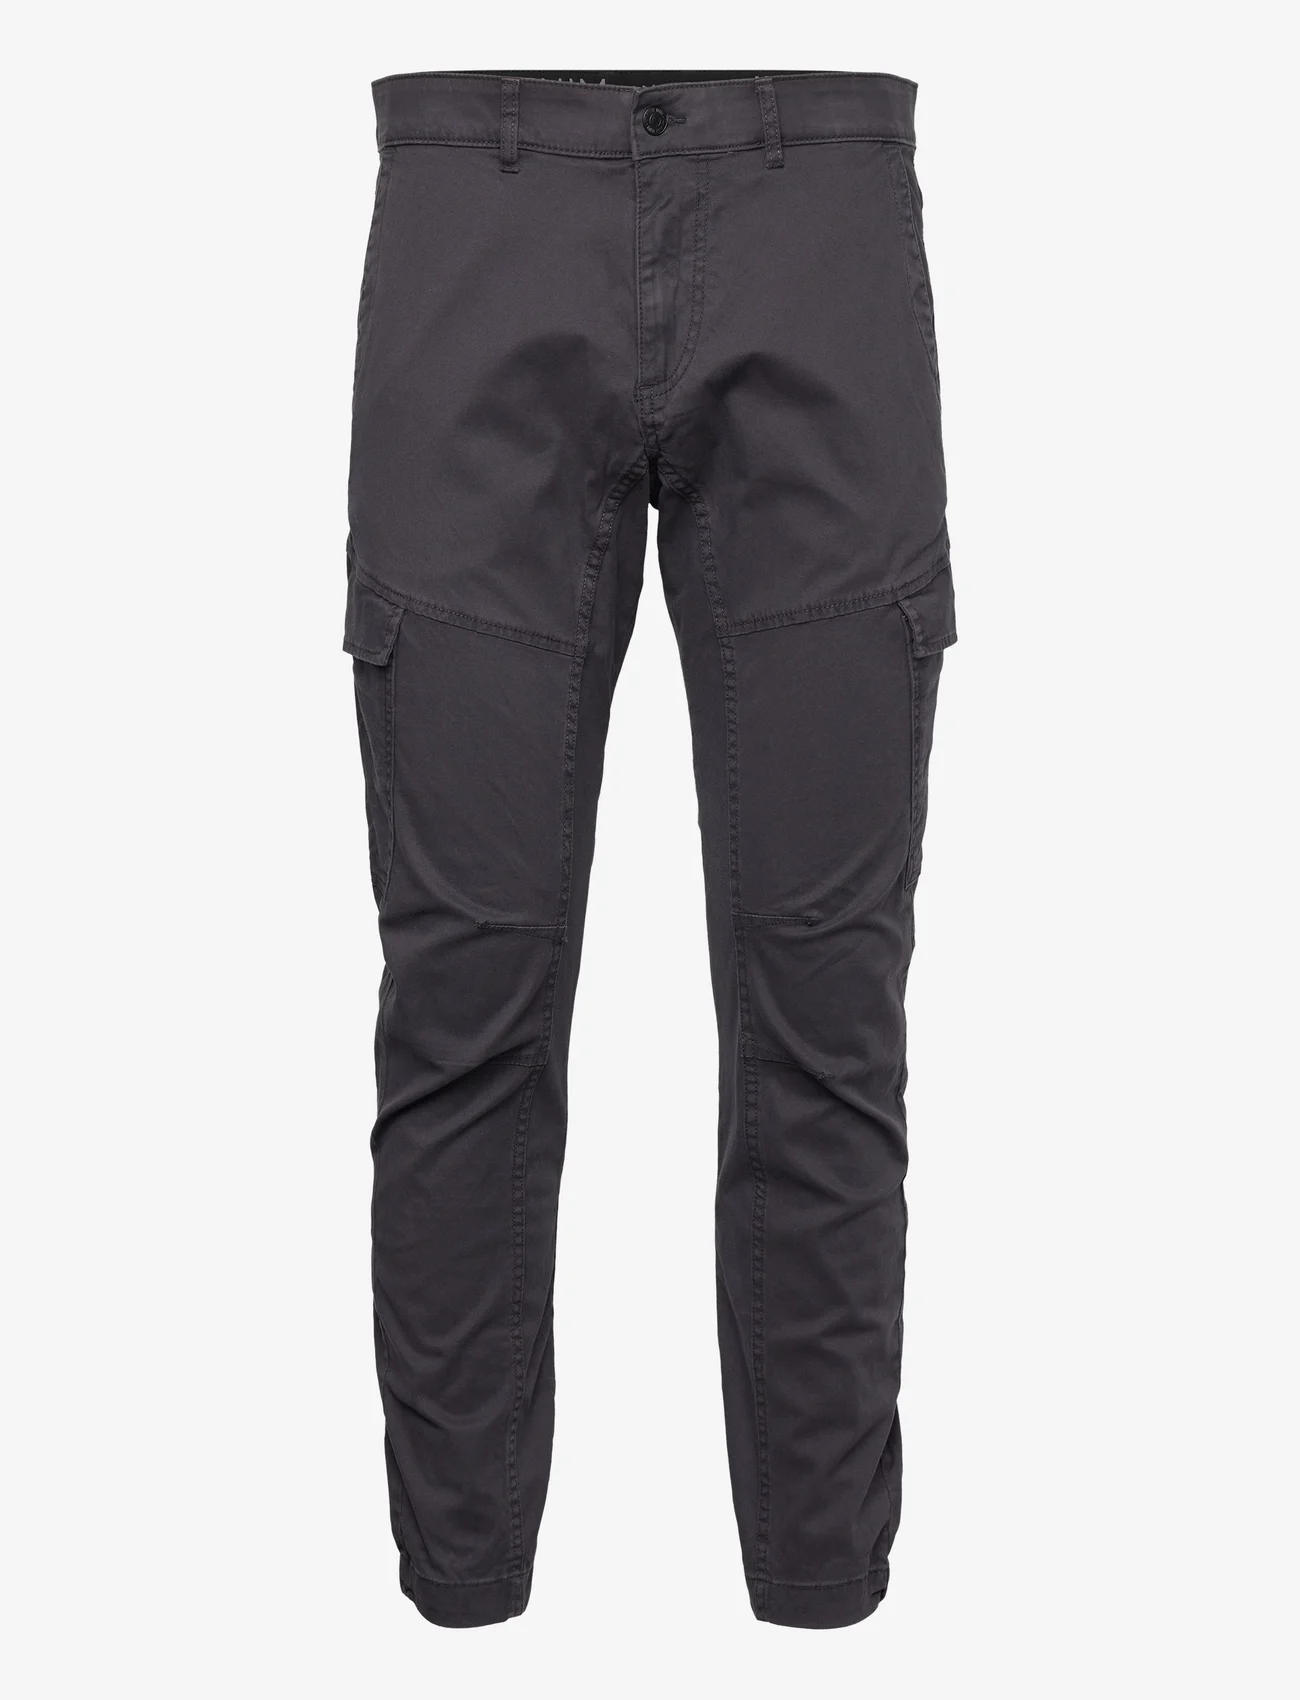 Tom Tailor - slim cargo pants - cargohose - coal grey - 0